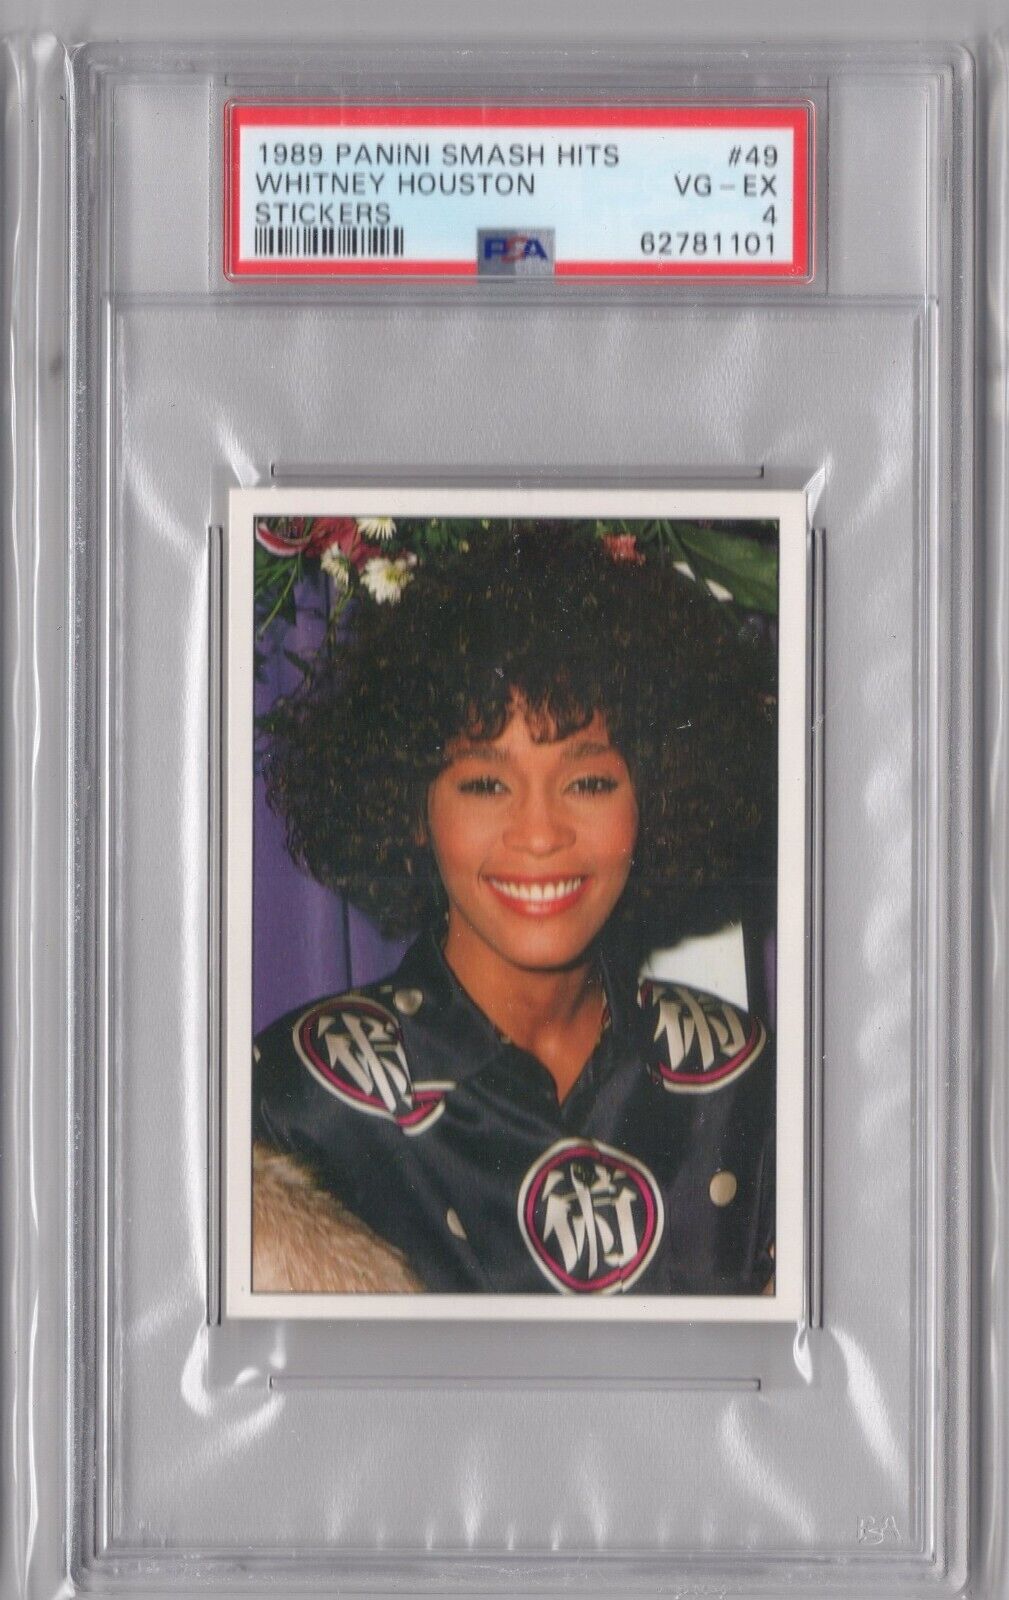 1989 Panini Smash Hits Collection #49 Sticker Card Whitney Houston PSA 4